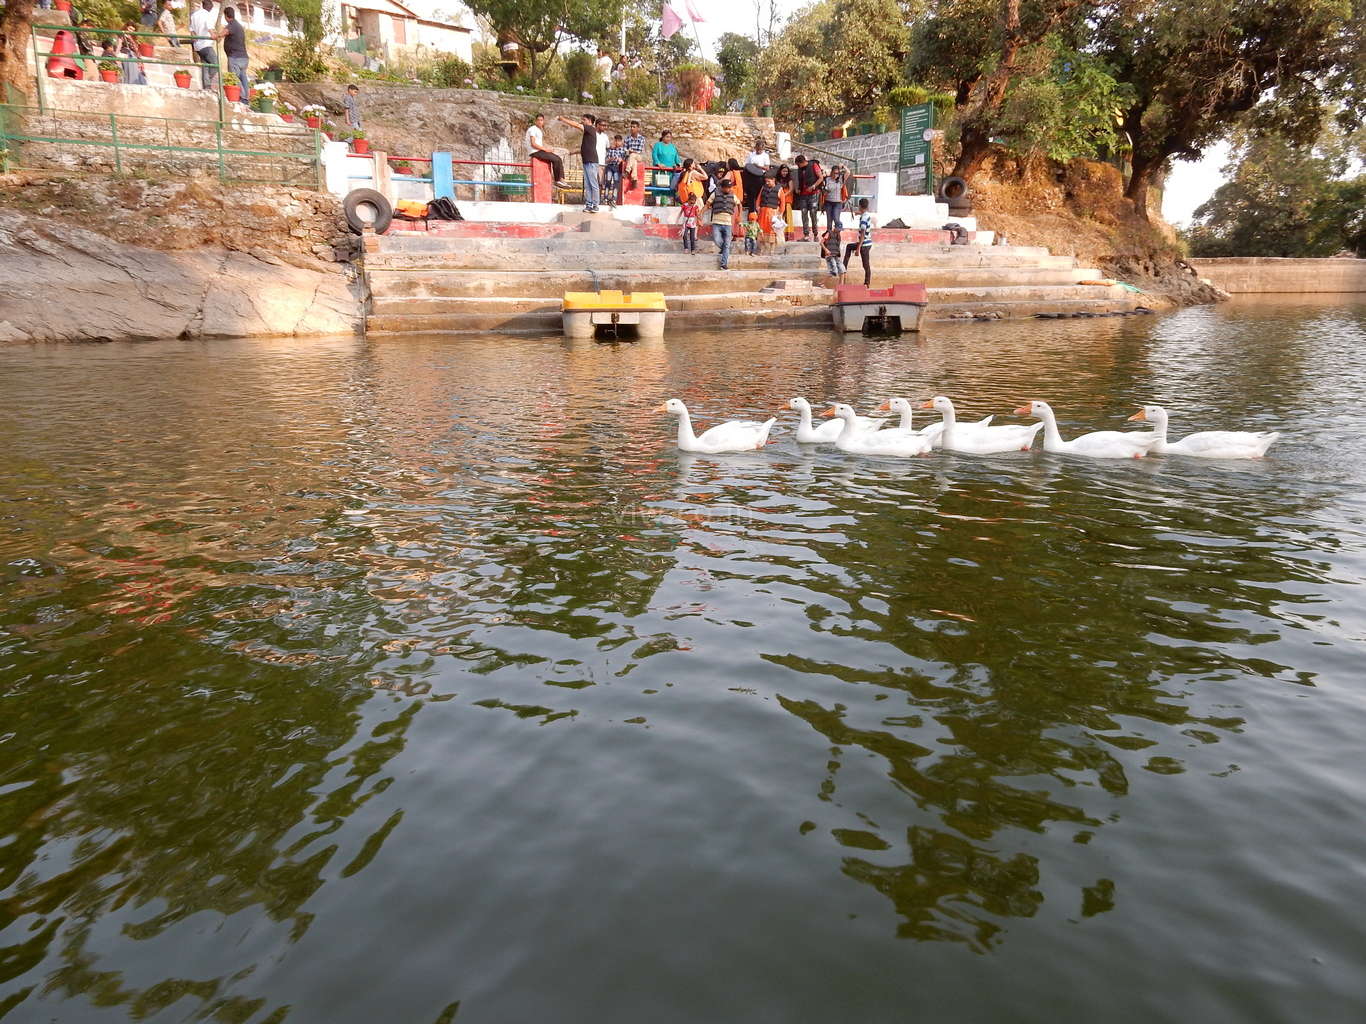 Duckrace in the bhullataal lake, uttarakhand